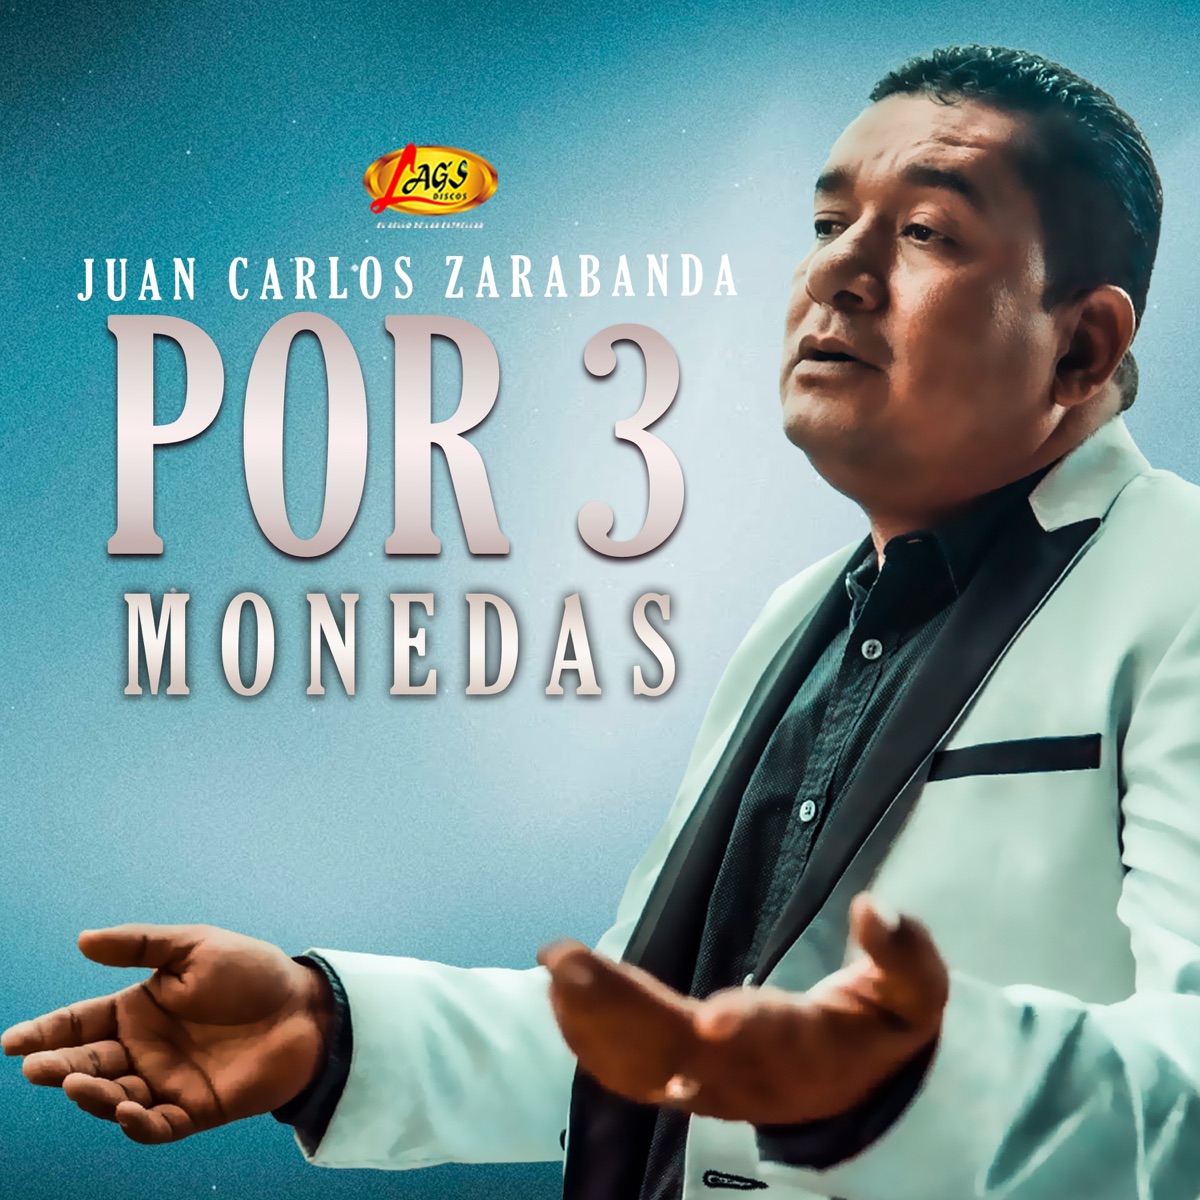 Juan Carlos Zarabanda - Por Tres Monedas - Single